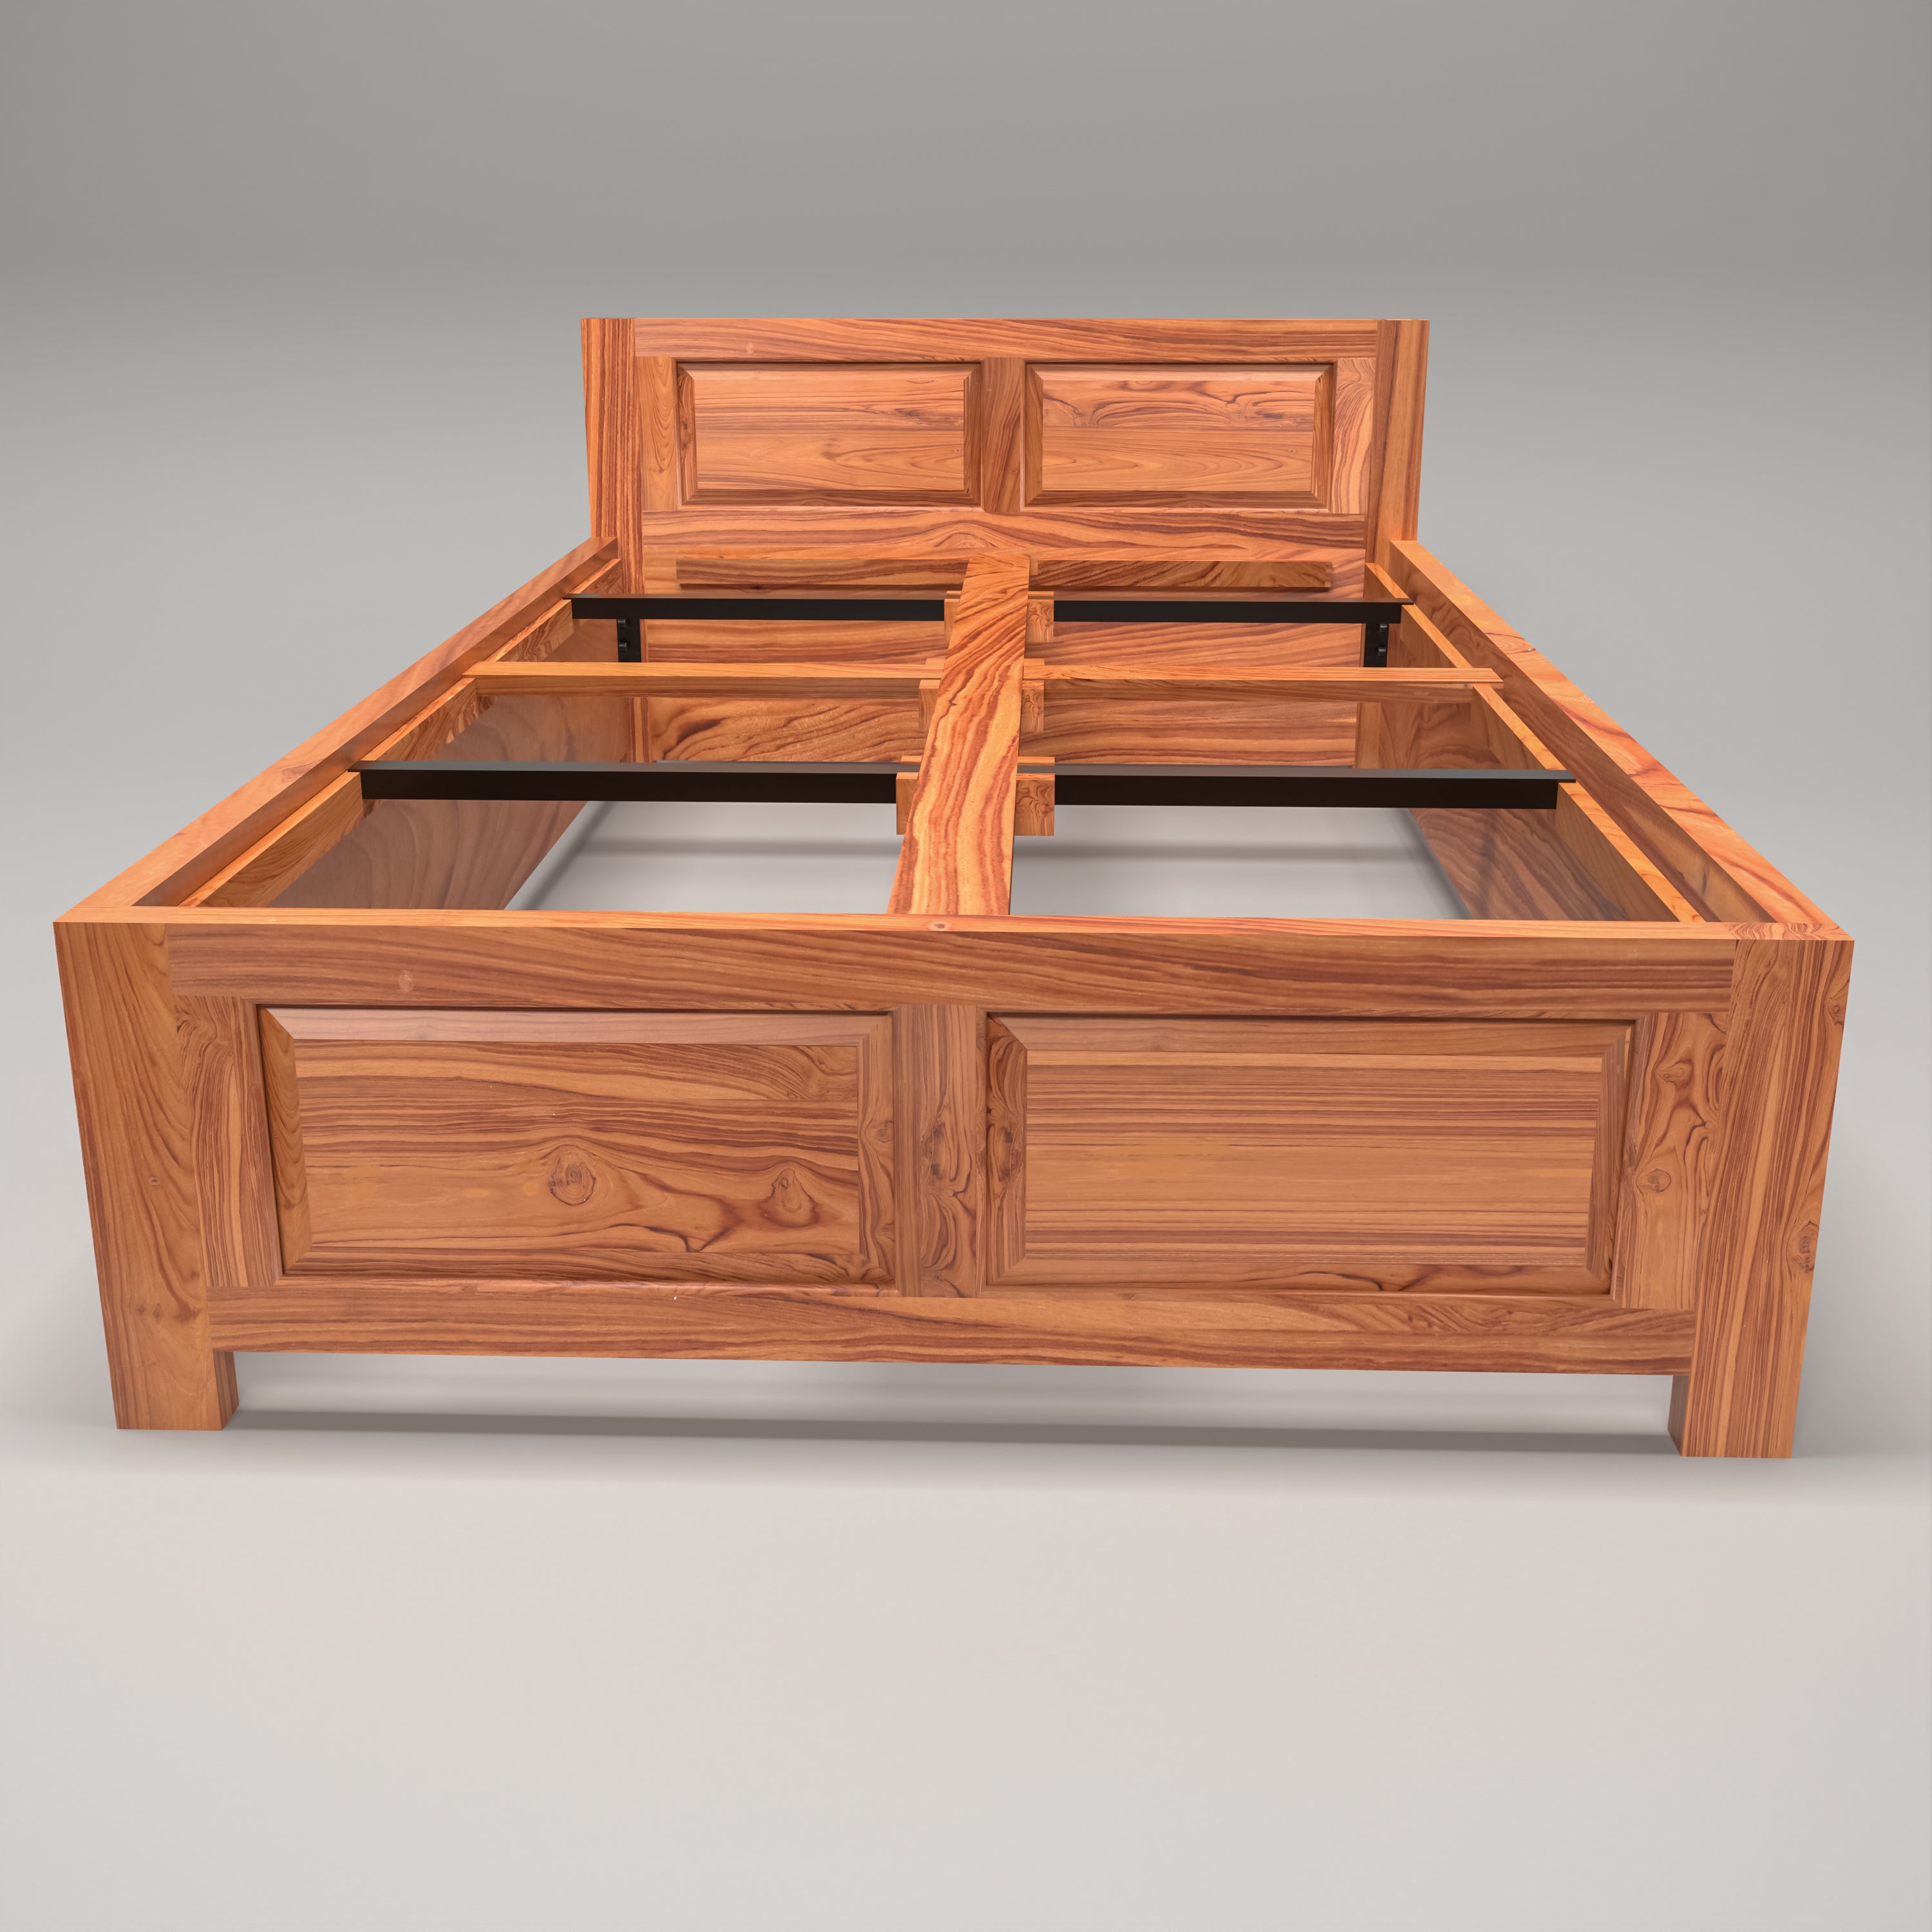 Wooden Designed Single Bed Bed